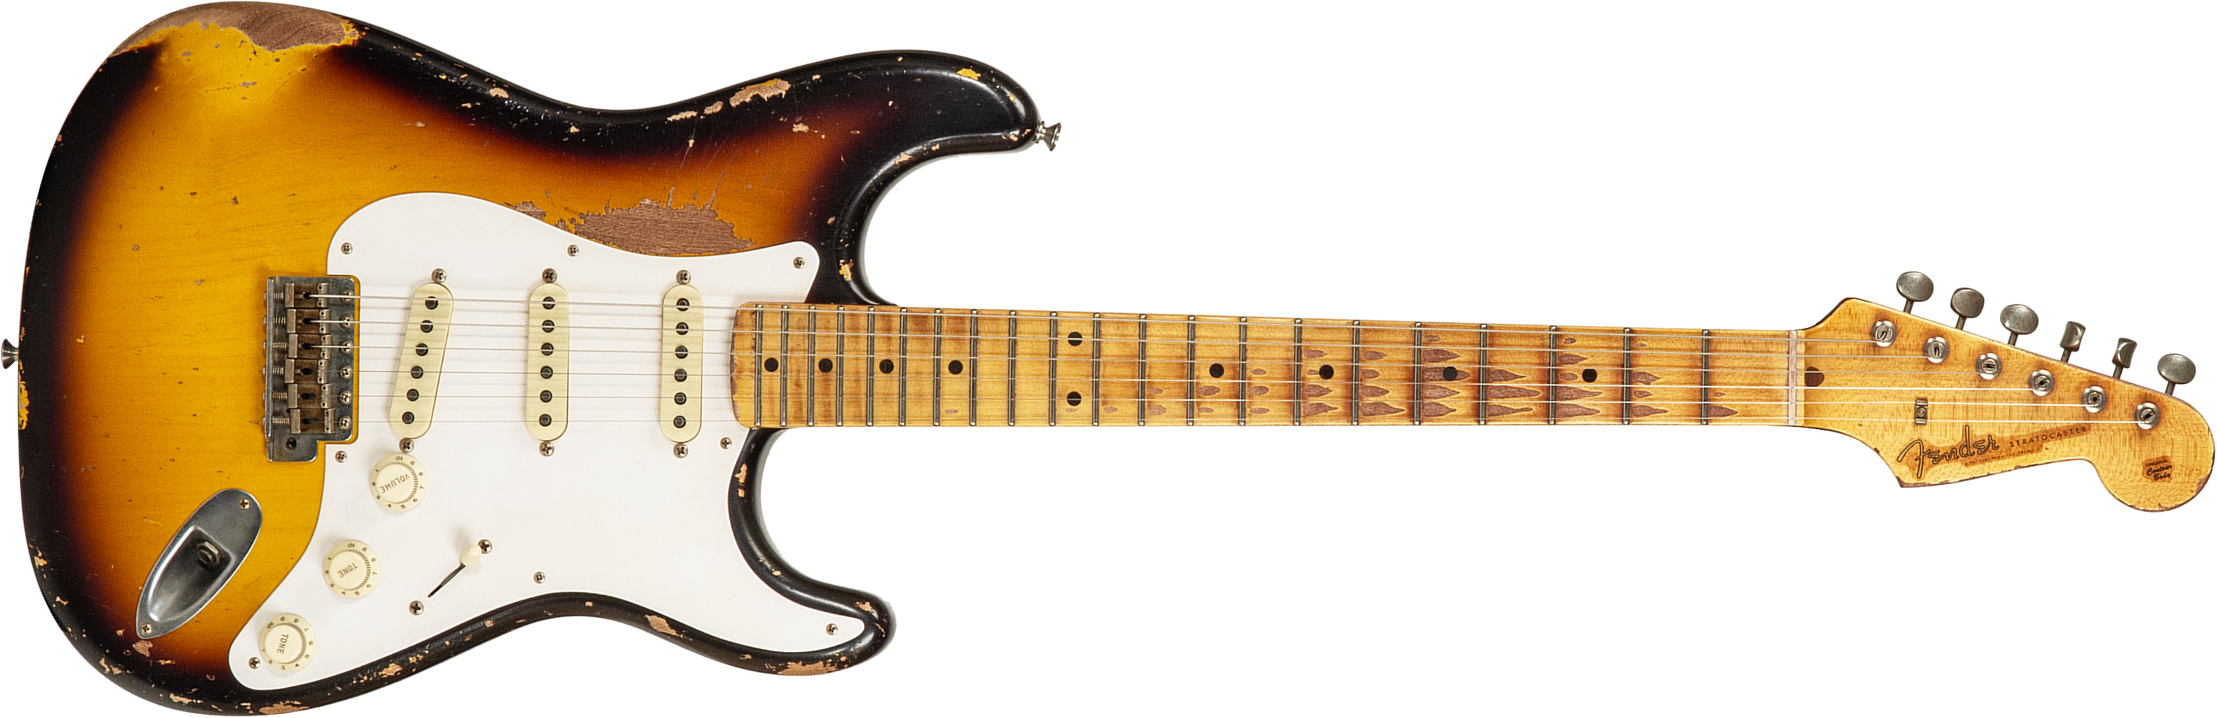 Fender Custom Shop Strat 1956 Masterbuilt K.mcmillin 3s Trem Mn #r129060 - Heavy Relic 2-color Sunburst - Elektrische gitaar in Str-vorm - Main pictur